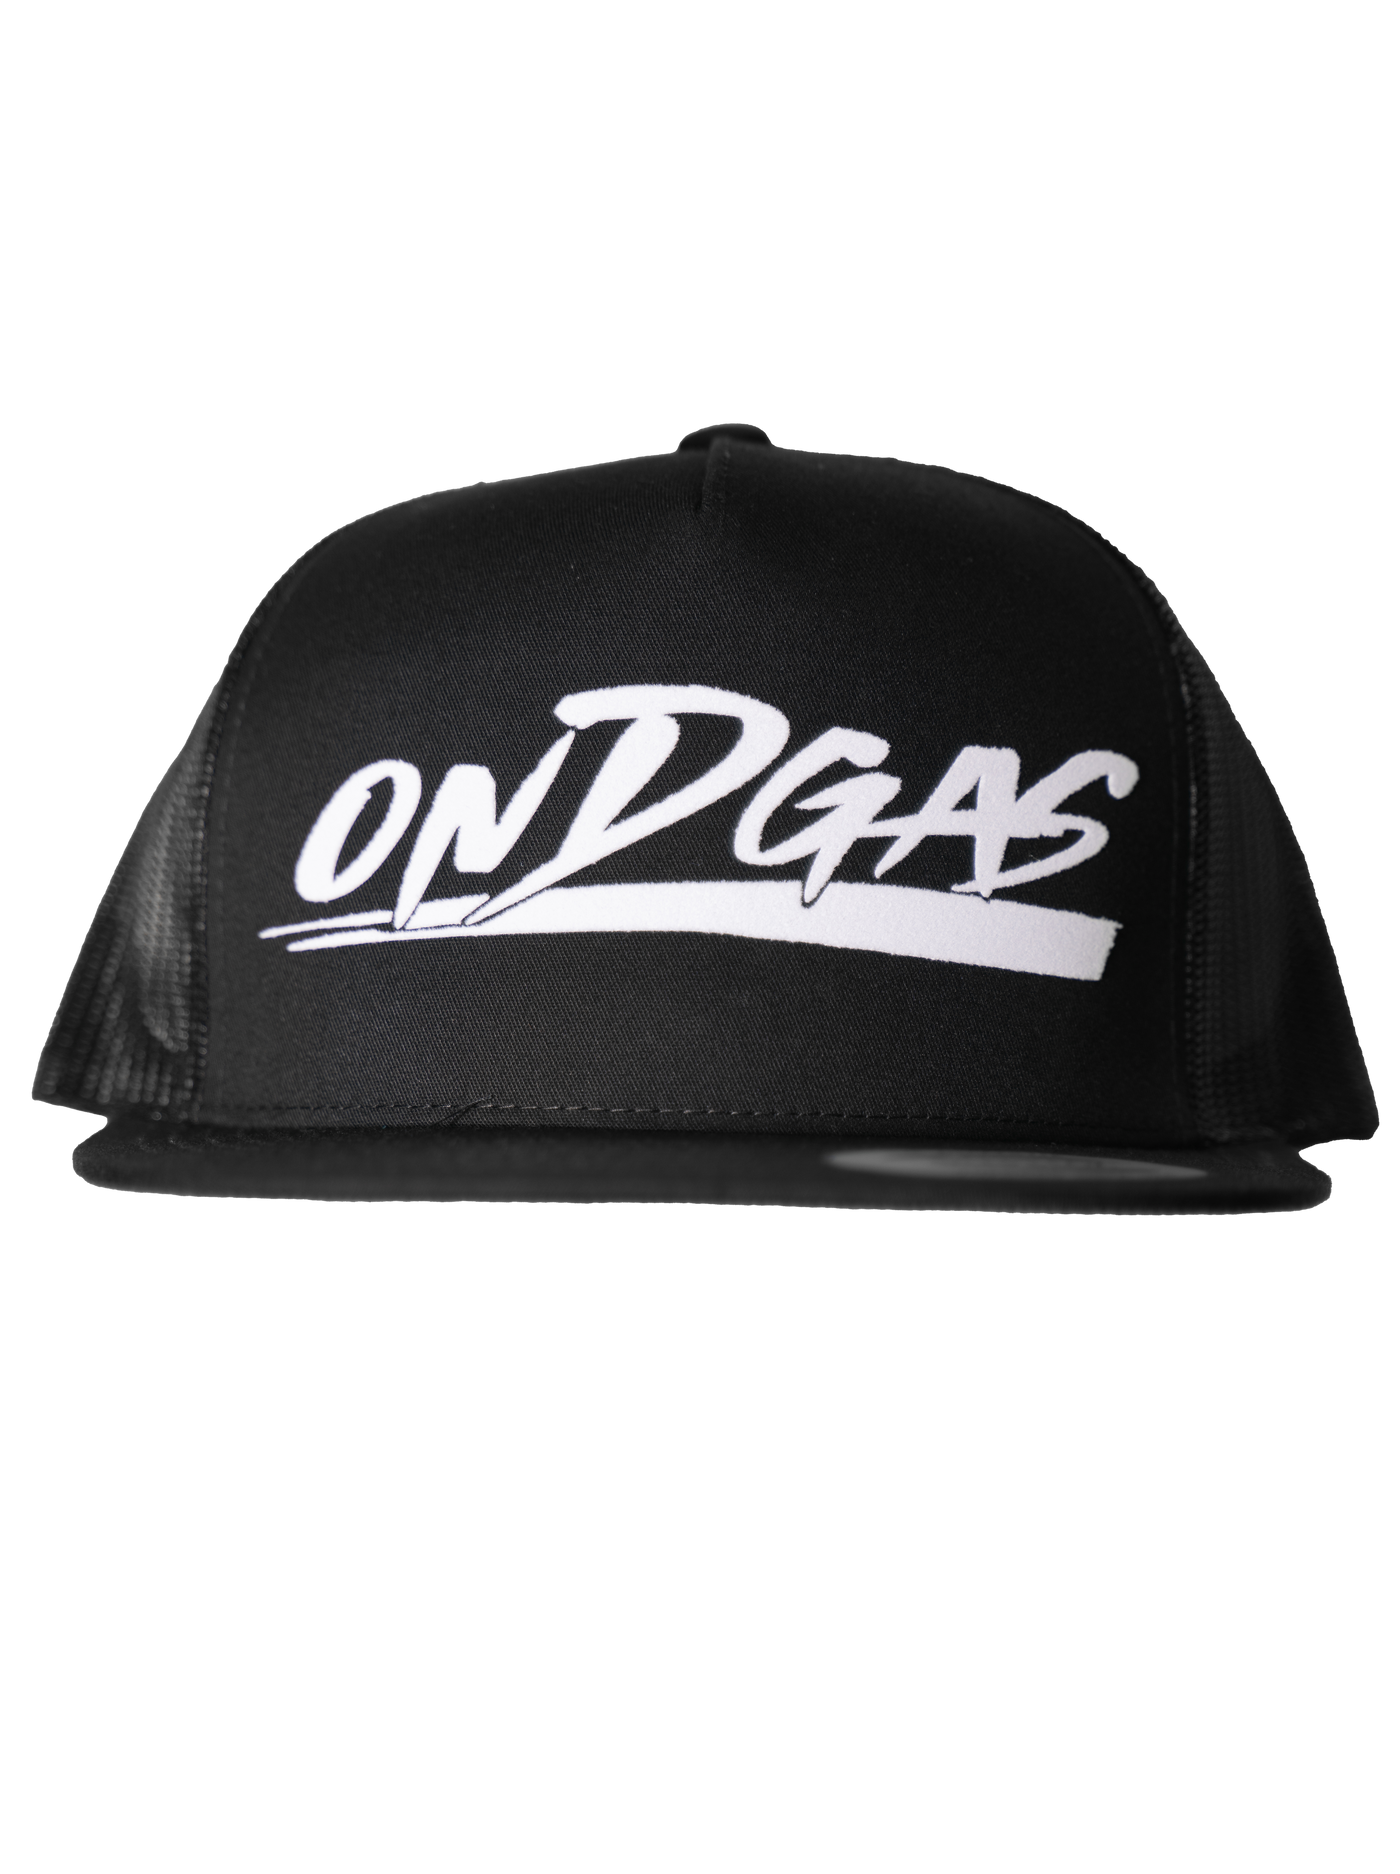 Black Hat with White brush ONDGAS logo (trucker hat)